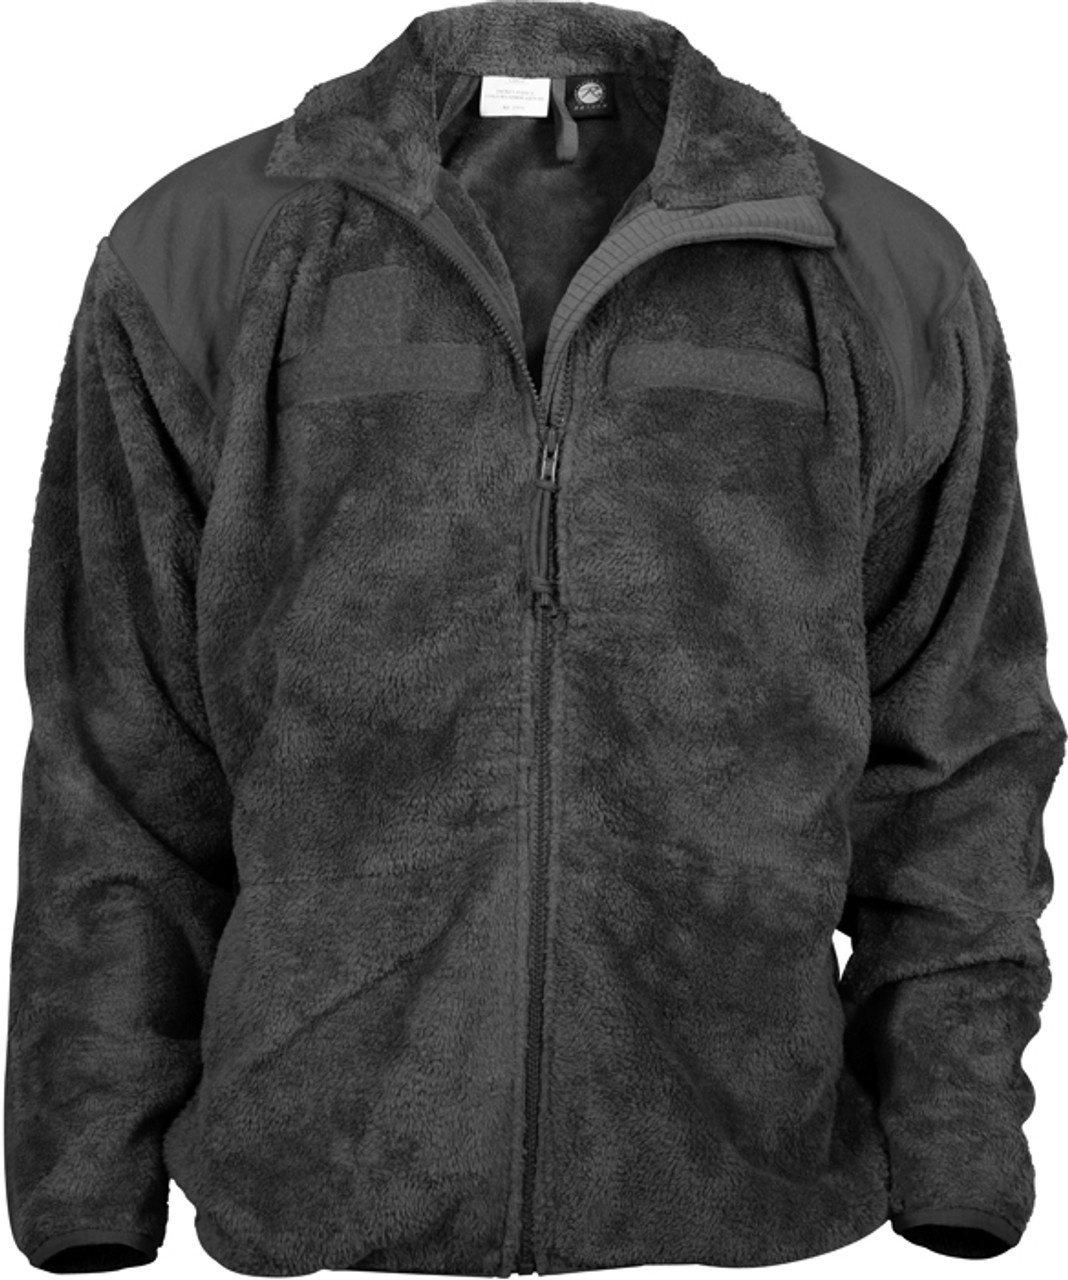 Black ECWCS Gen III Level 3 Military Soft Polar Fleece Jacket